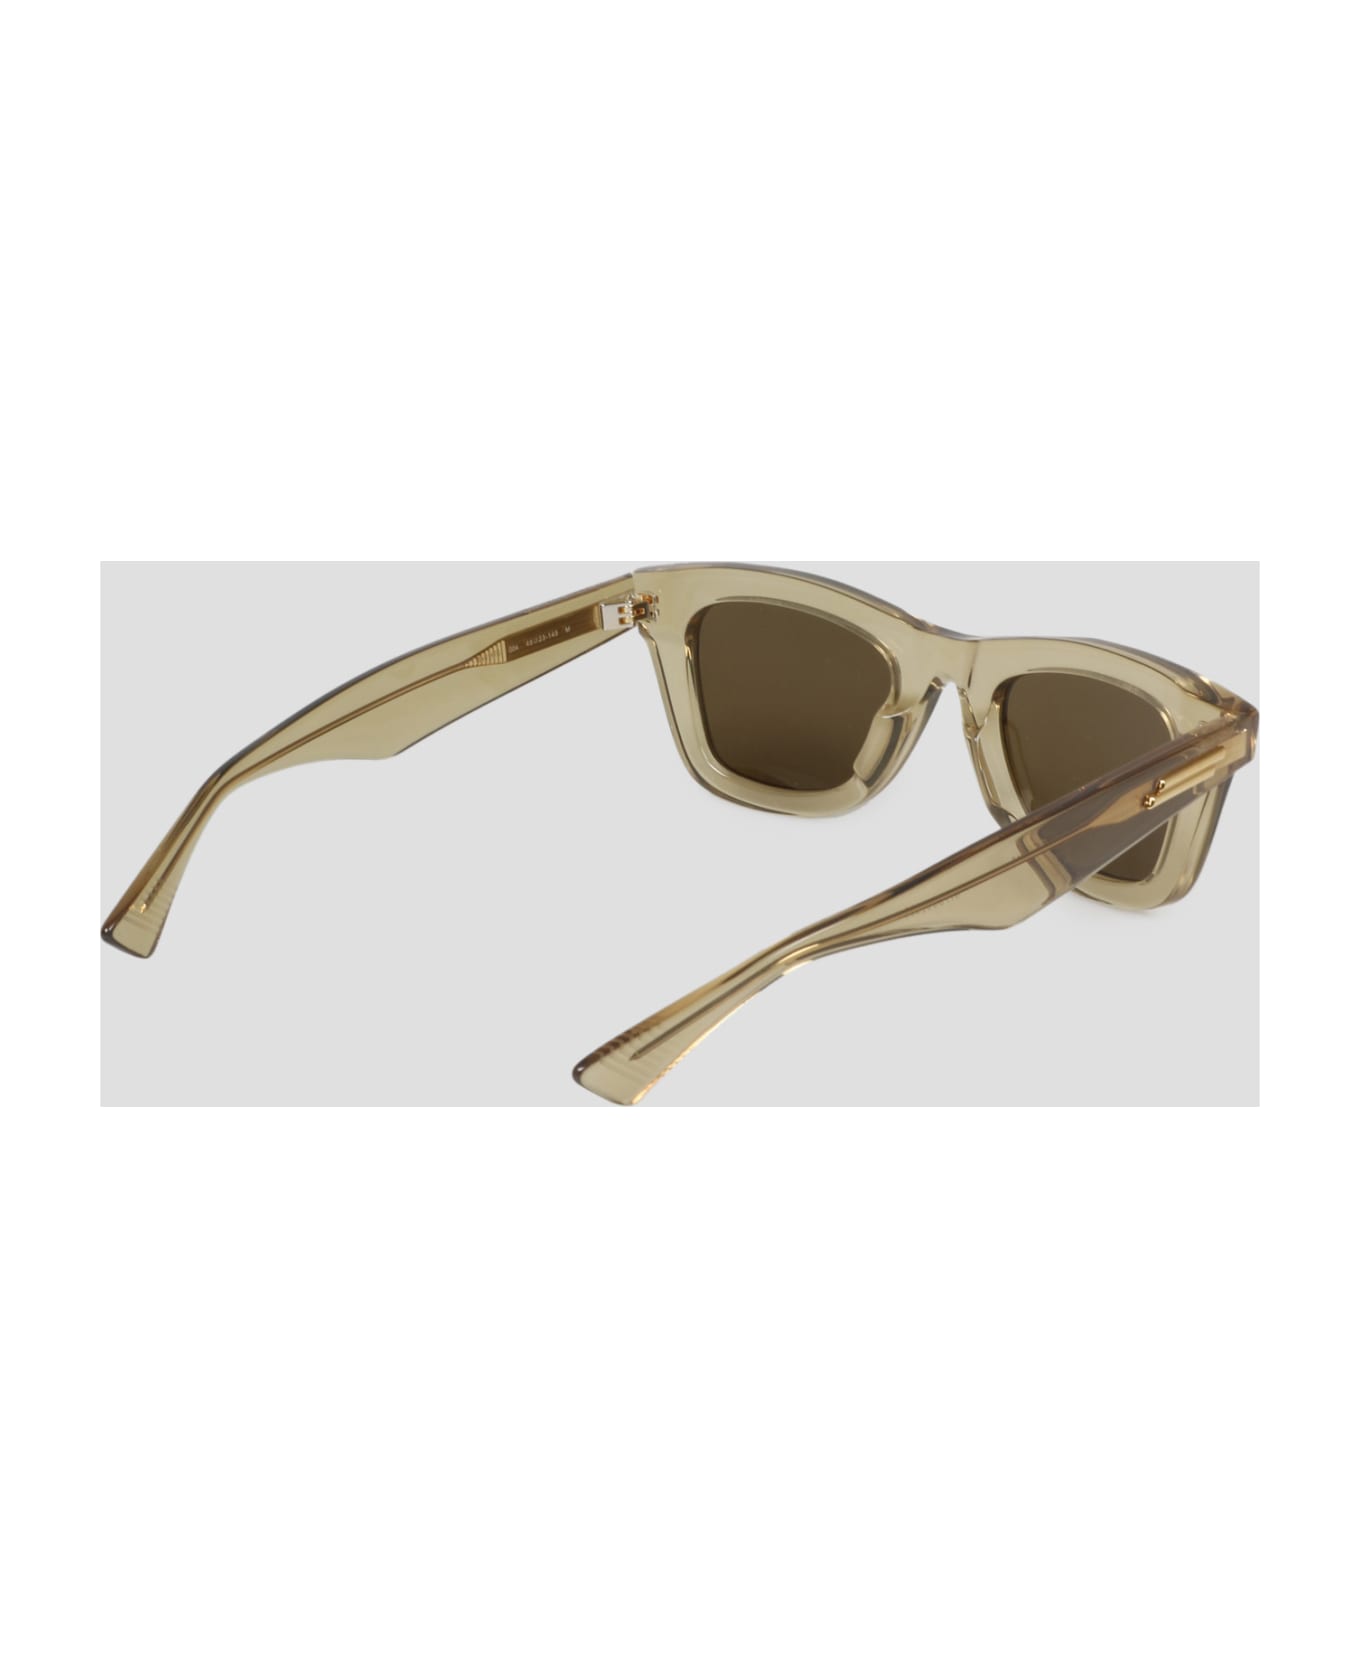 Bottega Veneta Eyewear Classic Sunglasses - Nude & Neutrals アイウェア